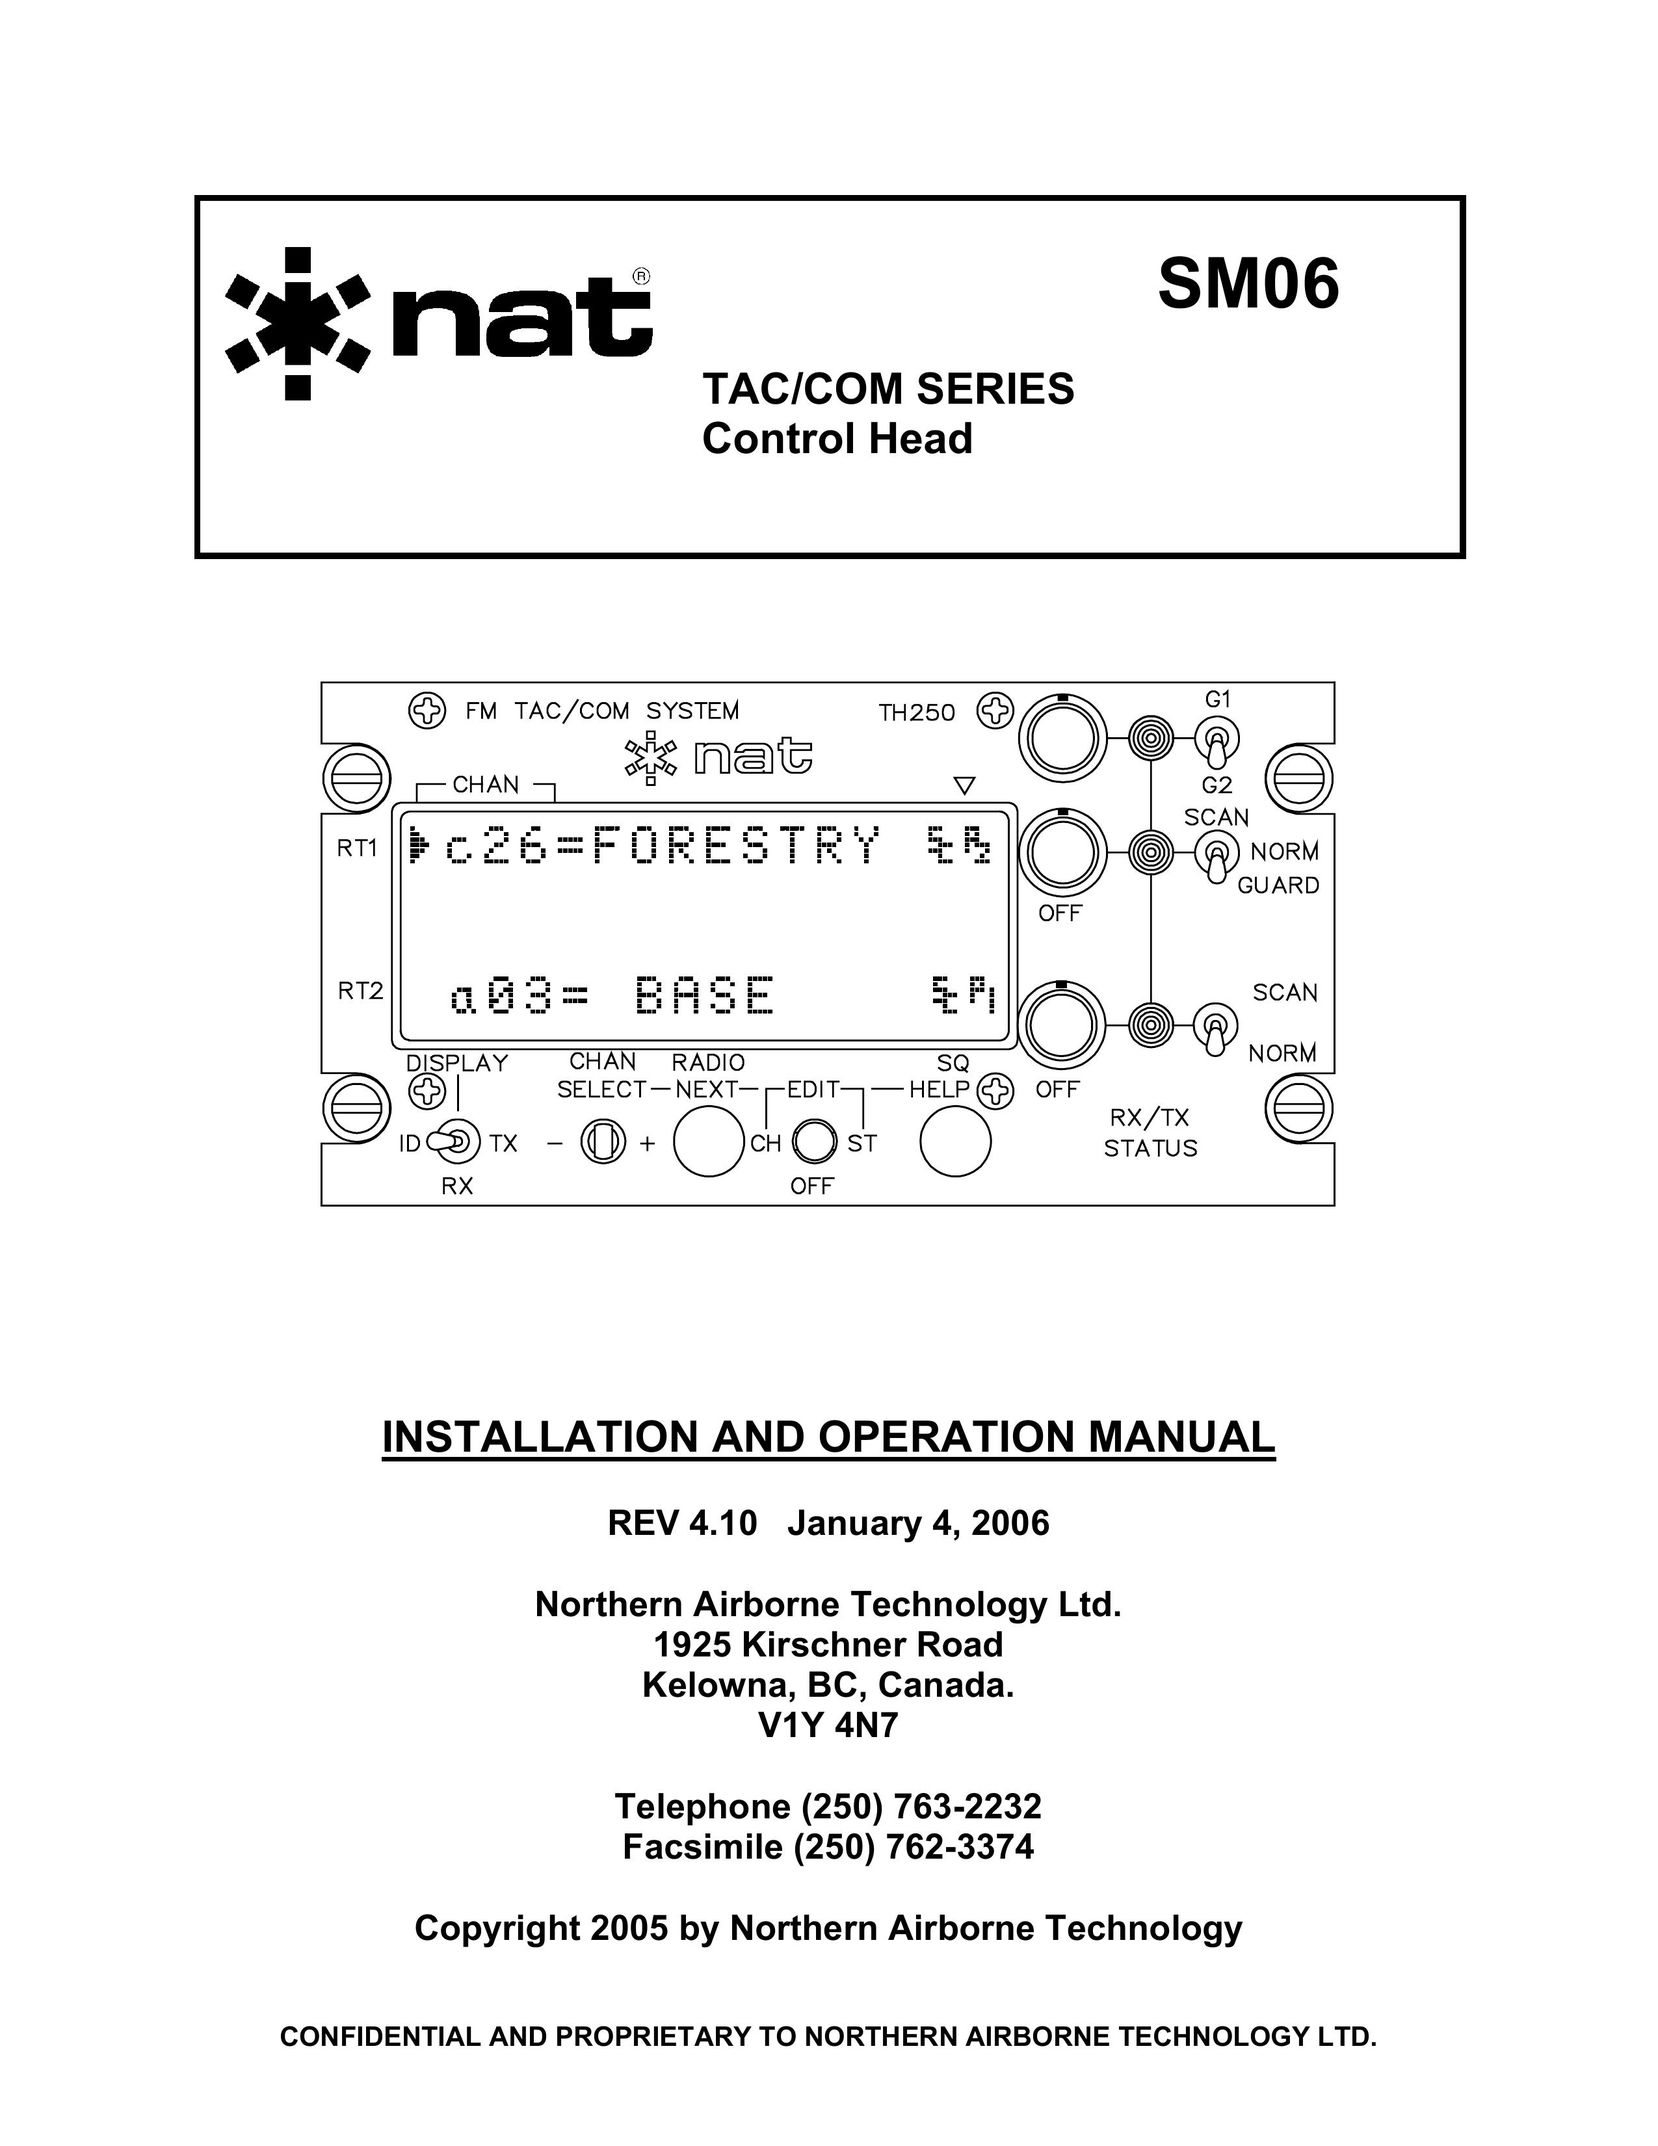 Spectra Logic TAC/COM SERIES Network Card User Manual